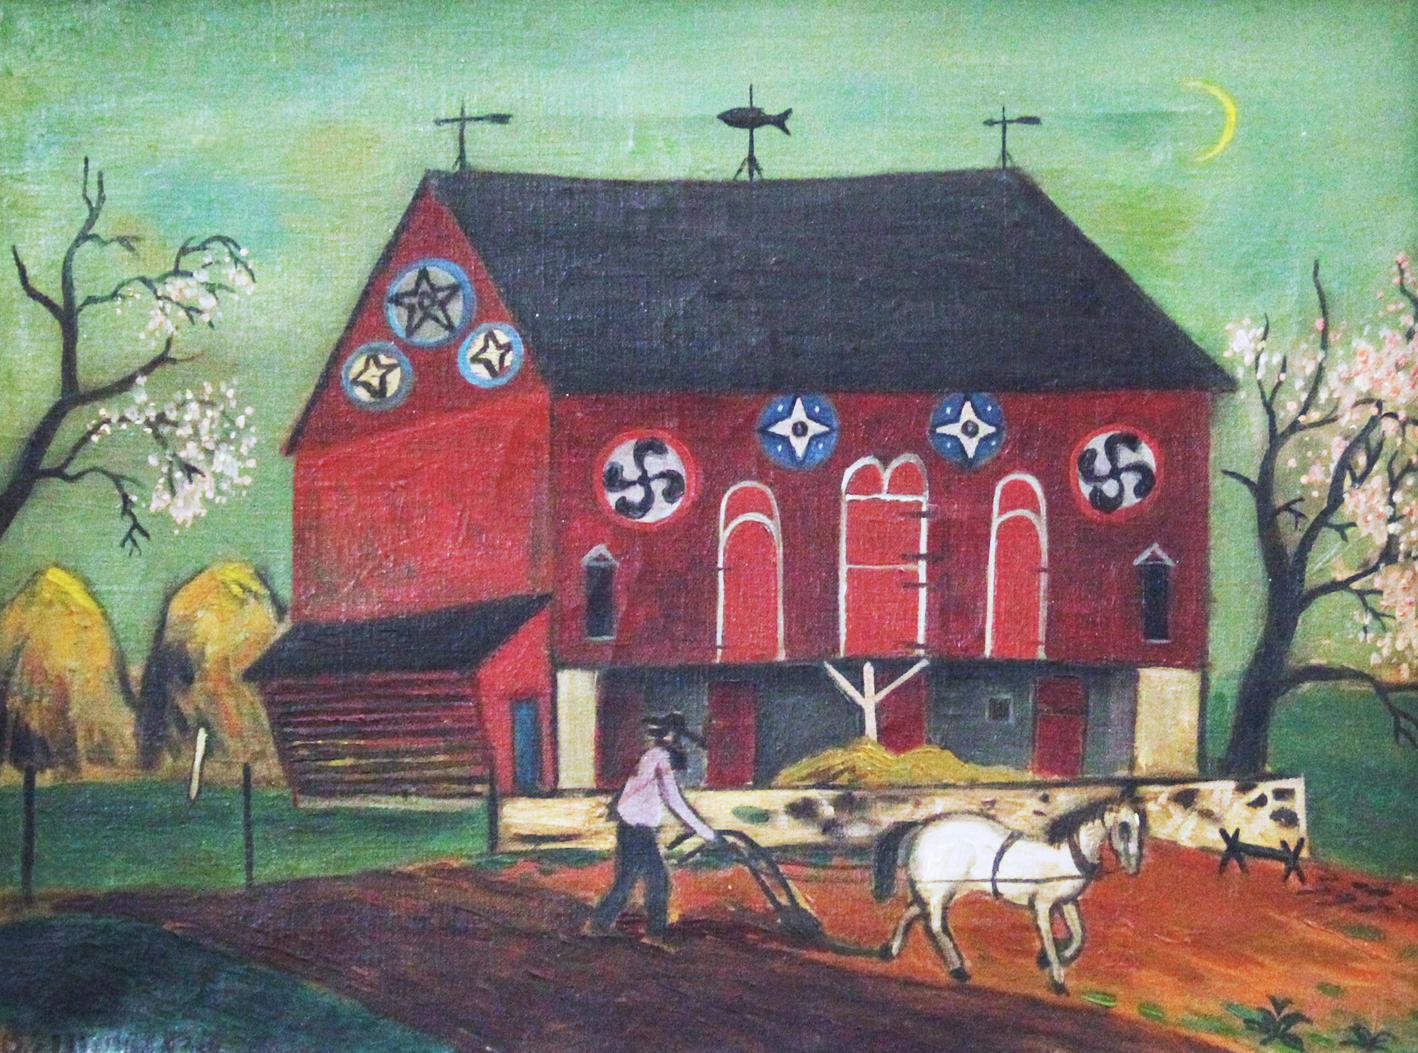 David Ellinger Landscape Painting - Spring Plowing, Folk Art Landscape with Figure, Pennsylvania Dutch Farm Scene